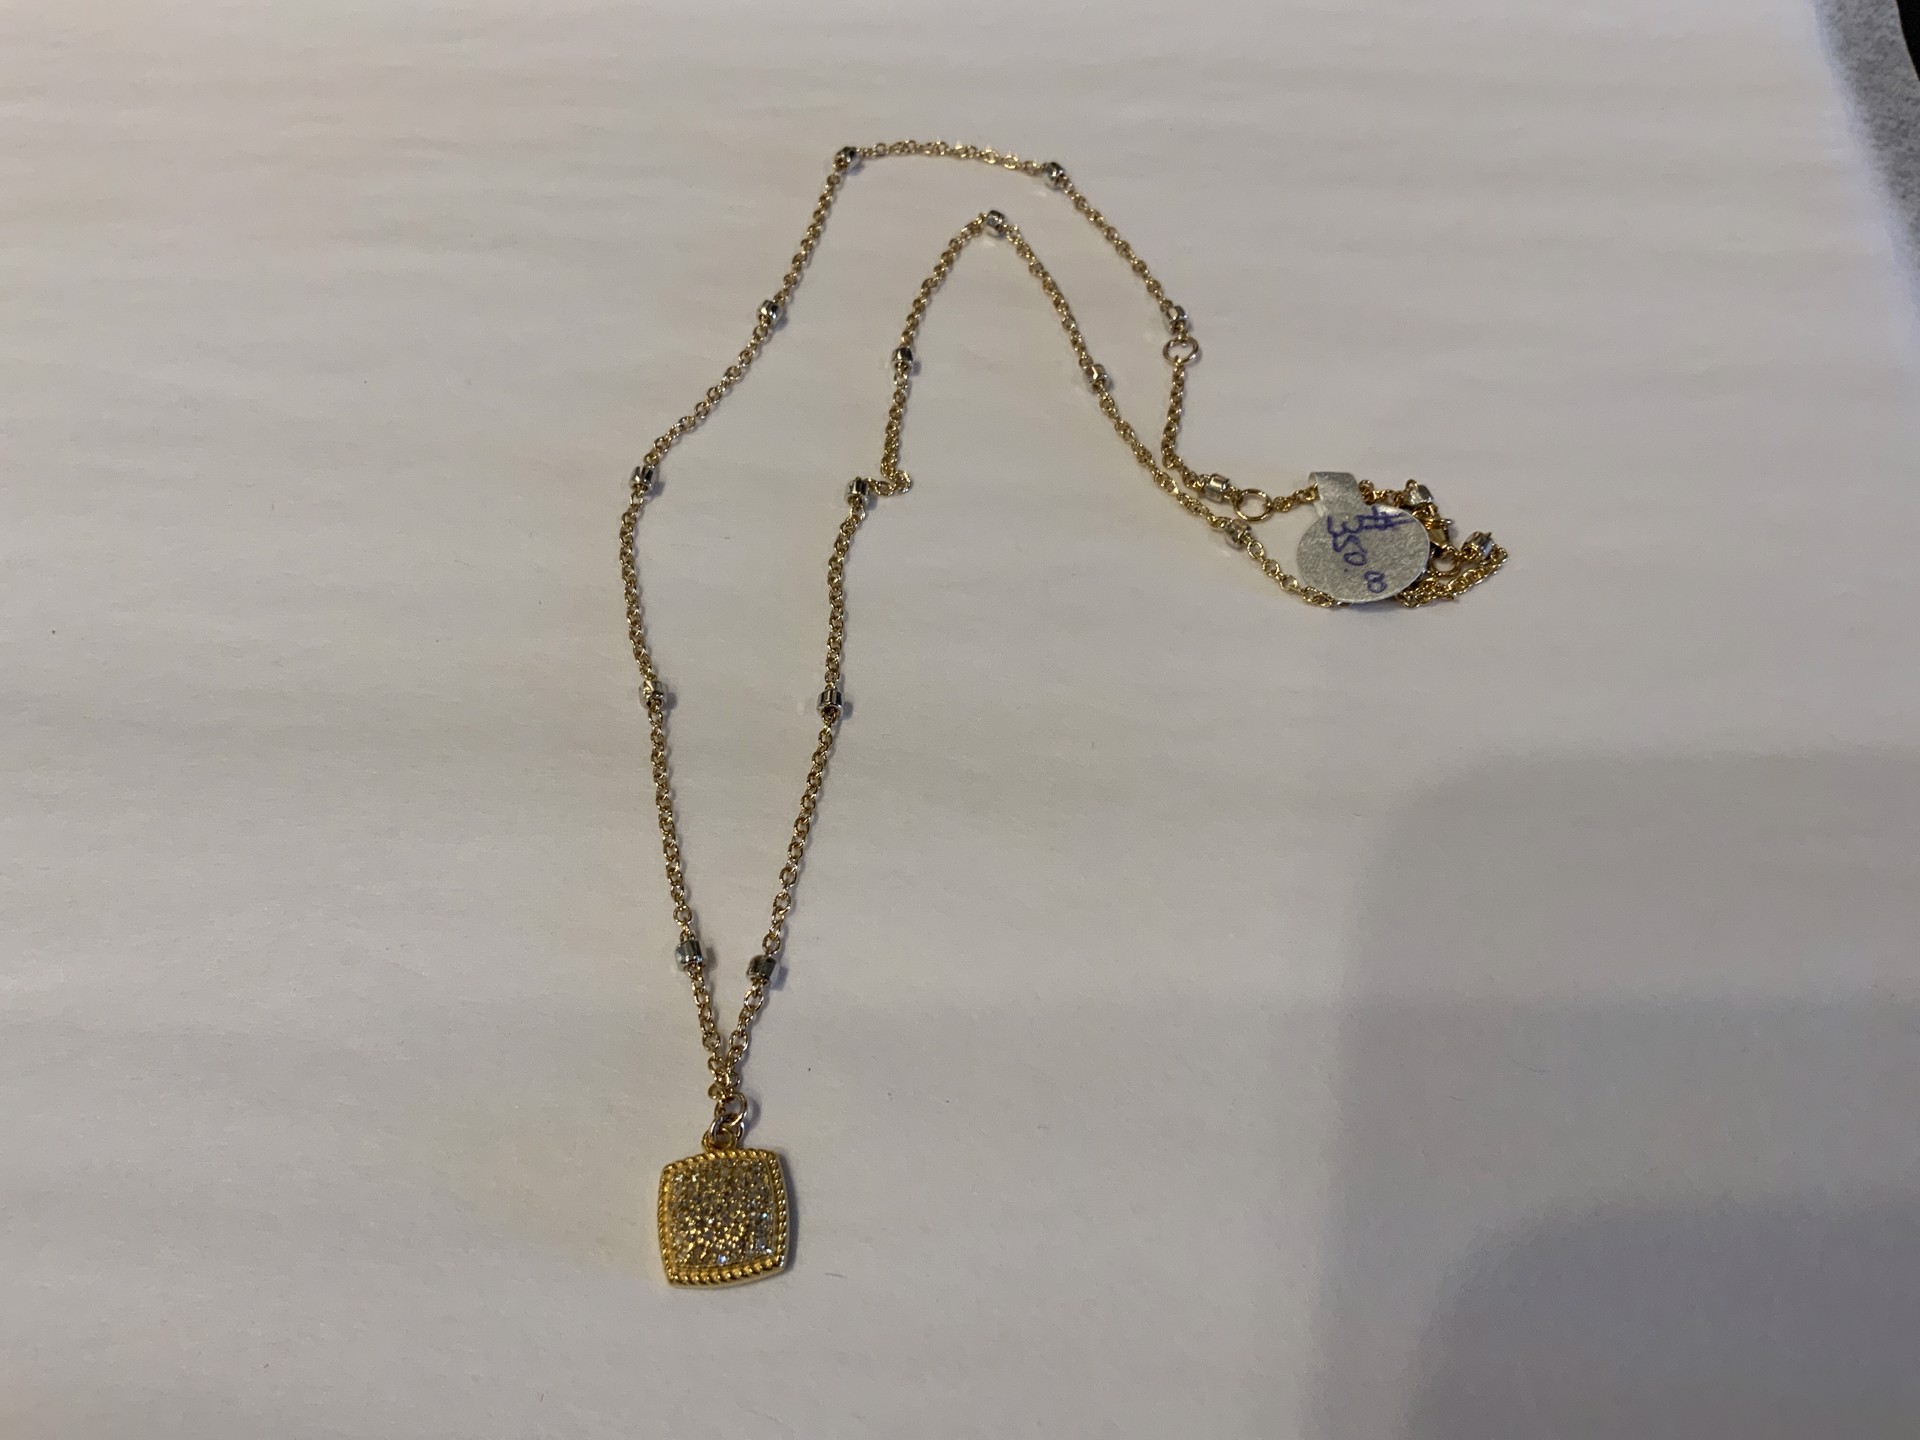 Gold Vermeil and Pave Diamond Square Necklace by Karen Birchmier